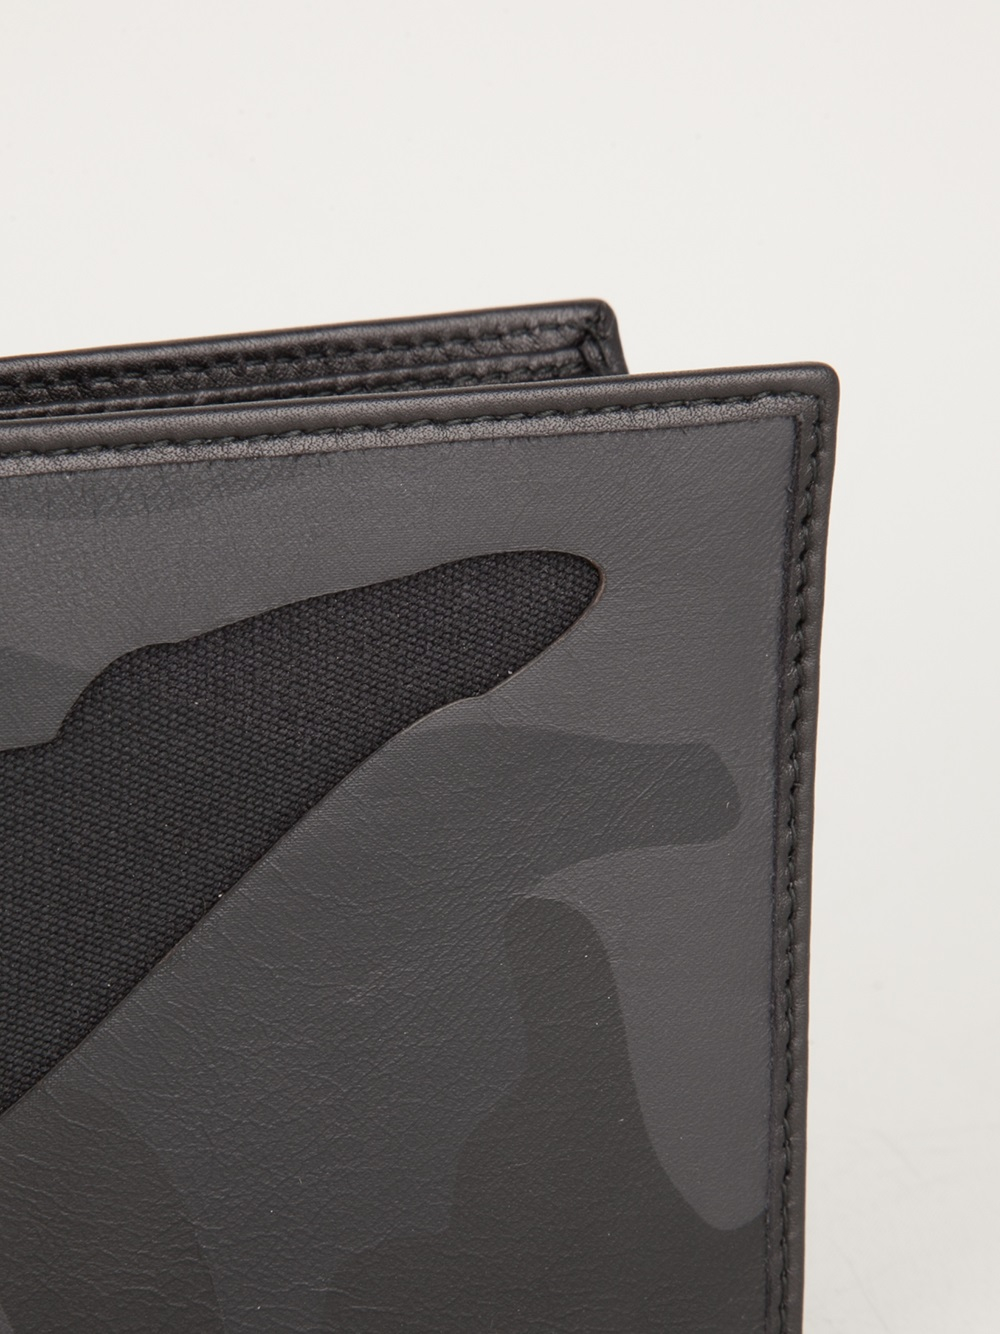 Valentino Camouflage Billfold Wallet in Black for Men - Lyst